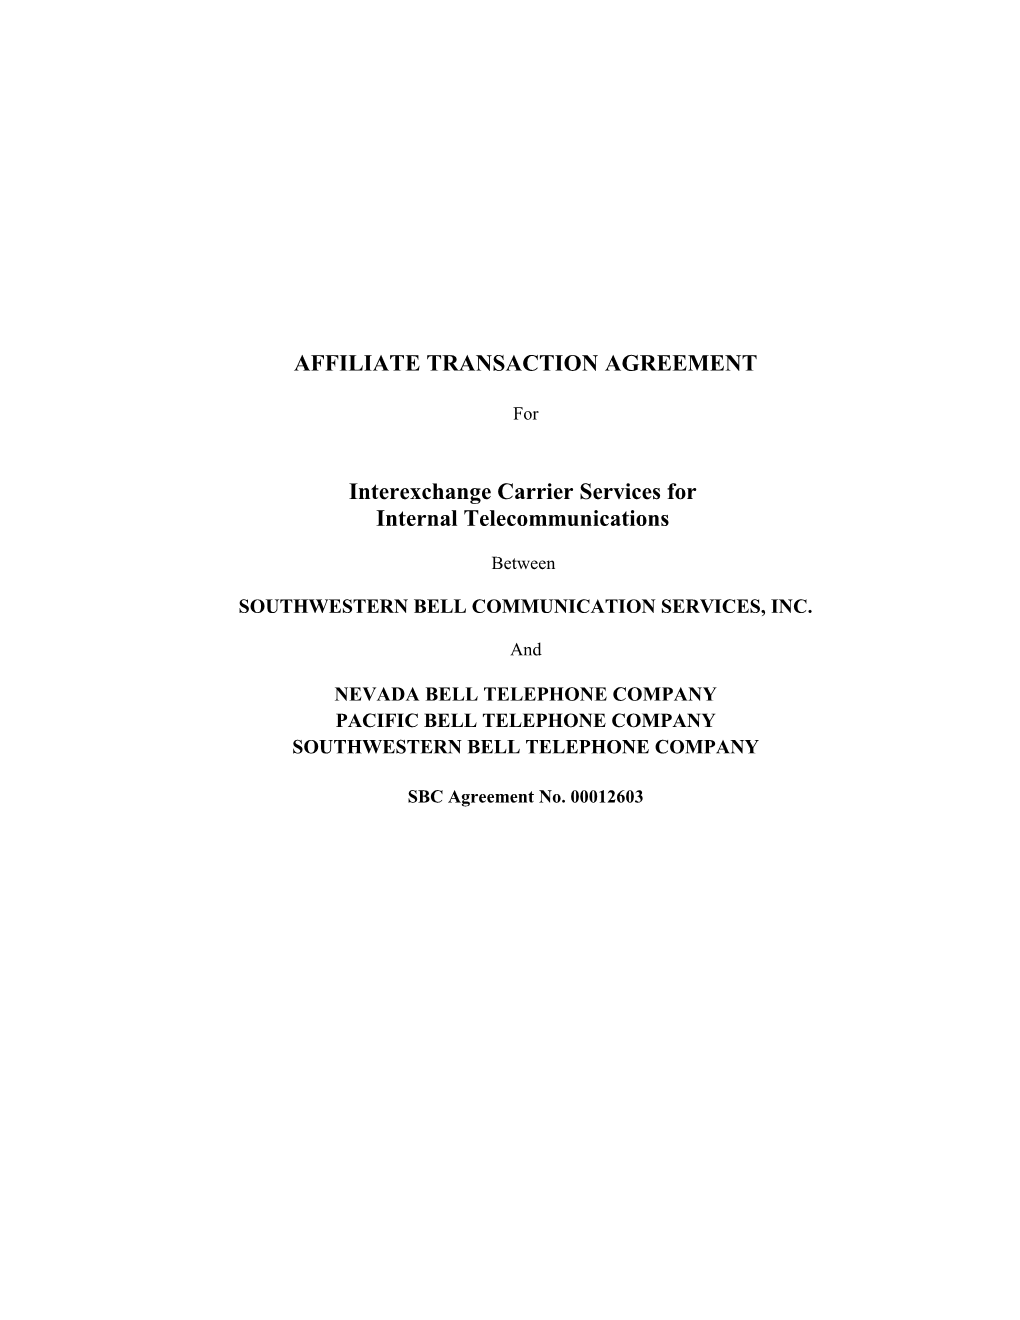 Affiliate Transaction Agreement